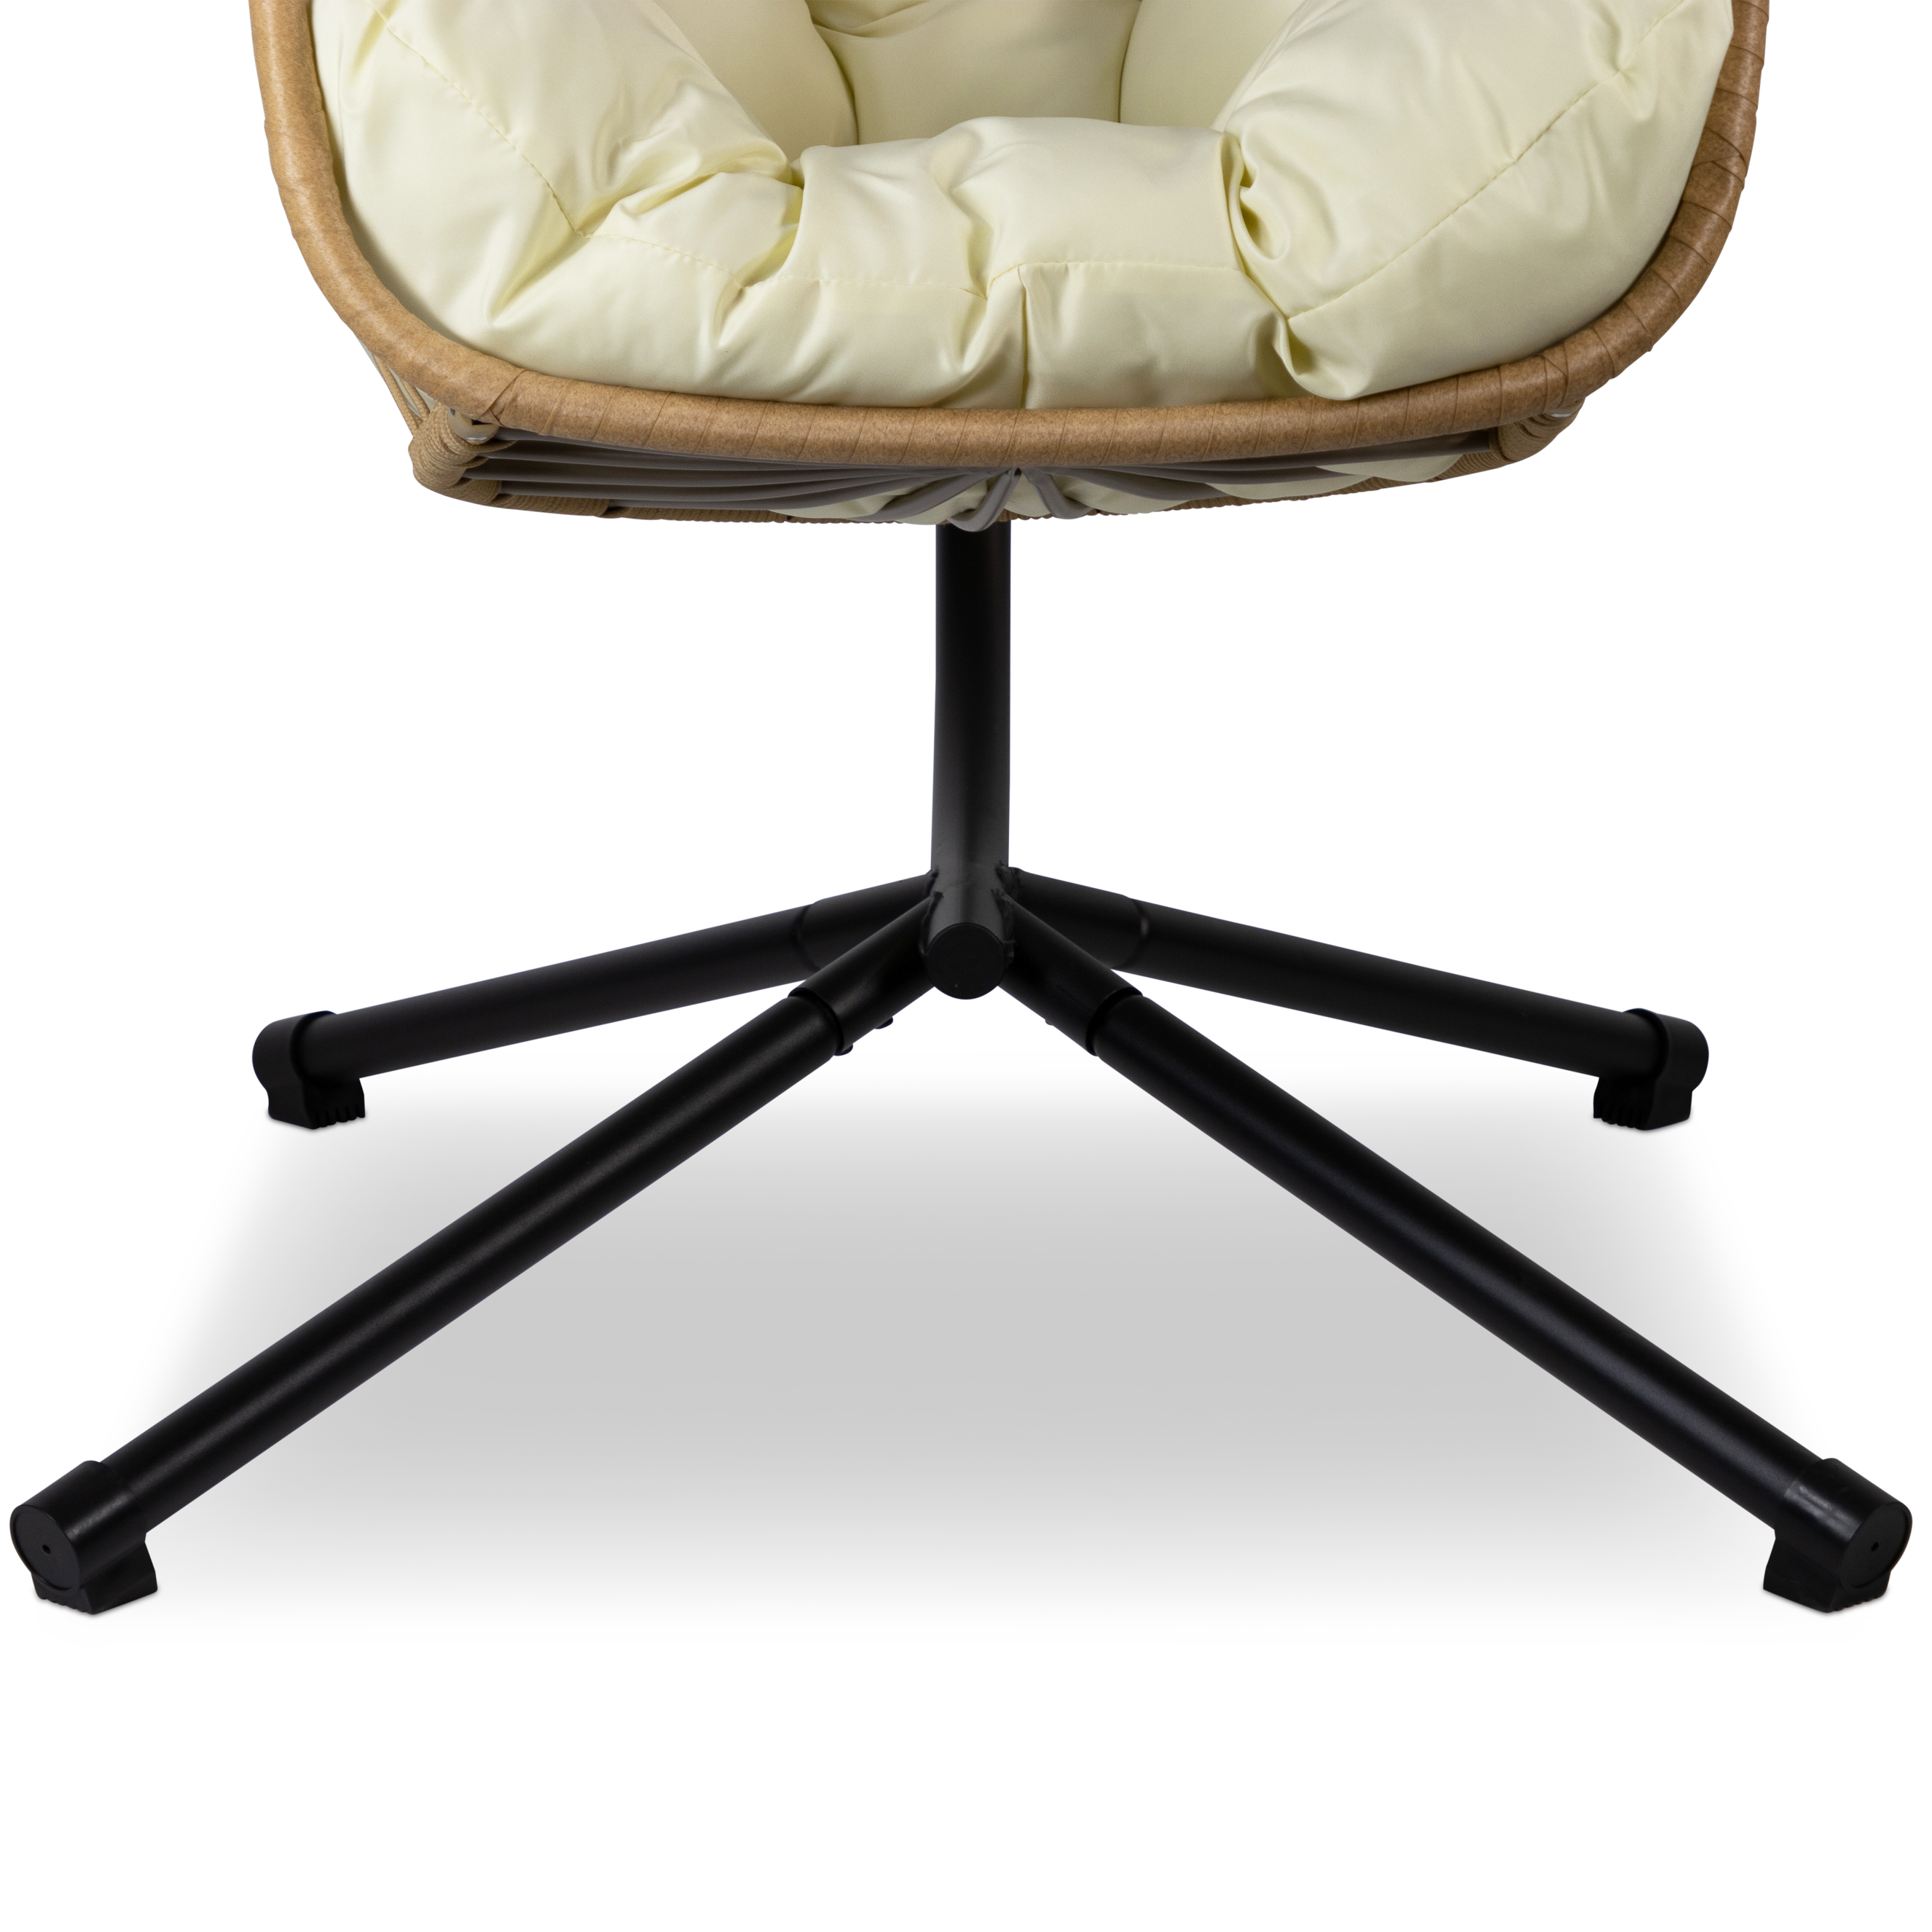 Zen Hanging Pod in Jute Rattan and Linen SpunPoly Cushion